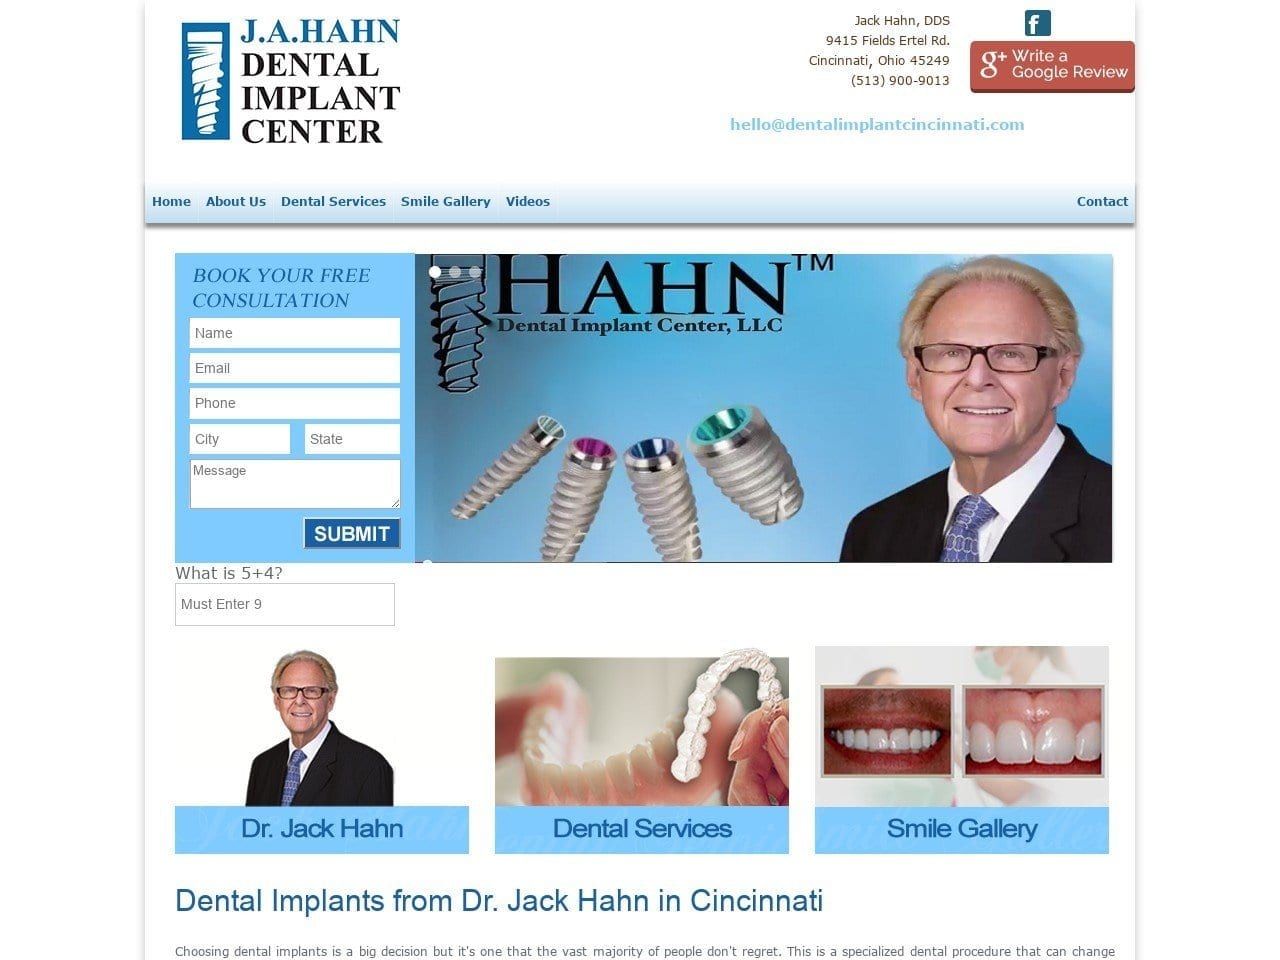 Jack Hahn DDS Website Screenshot from dentalimplantcincinnati.com